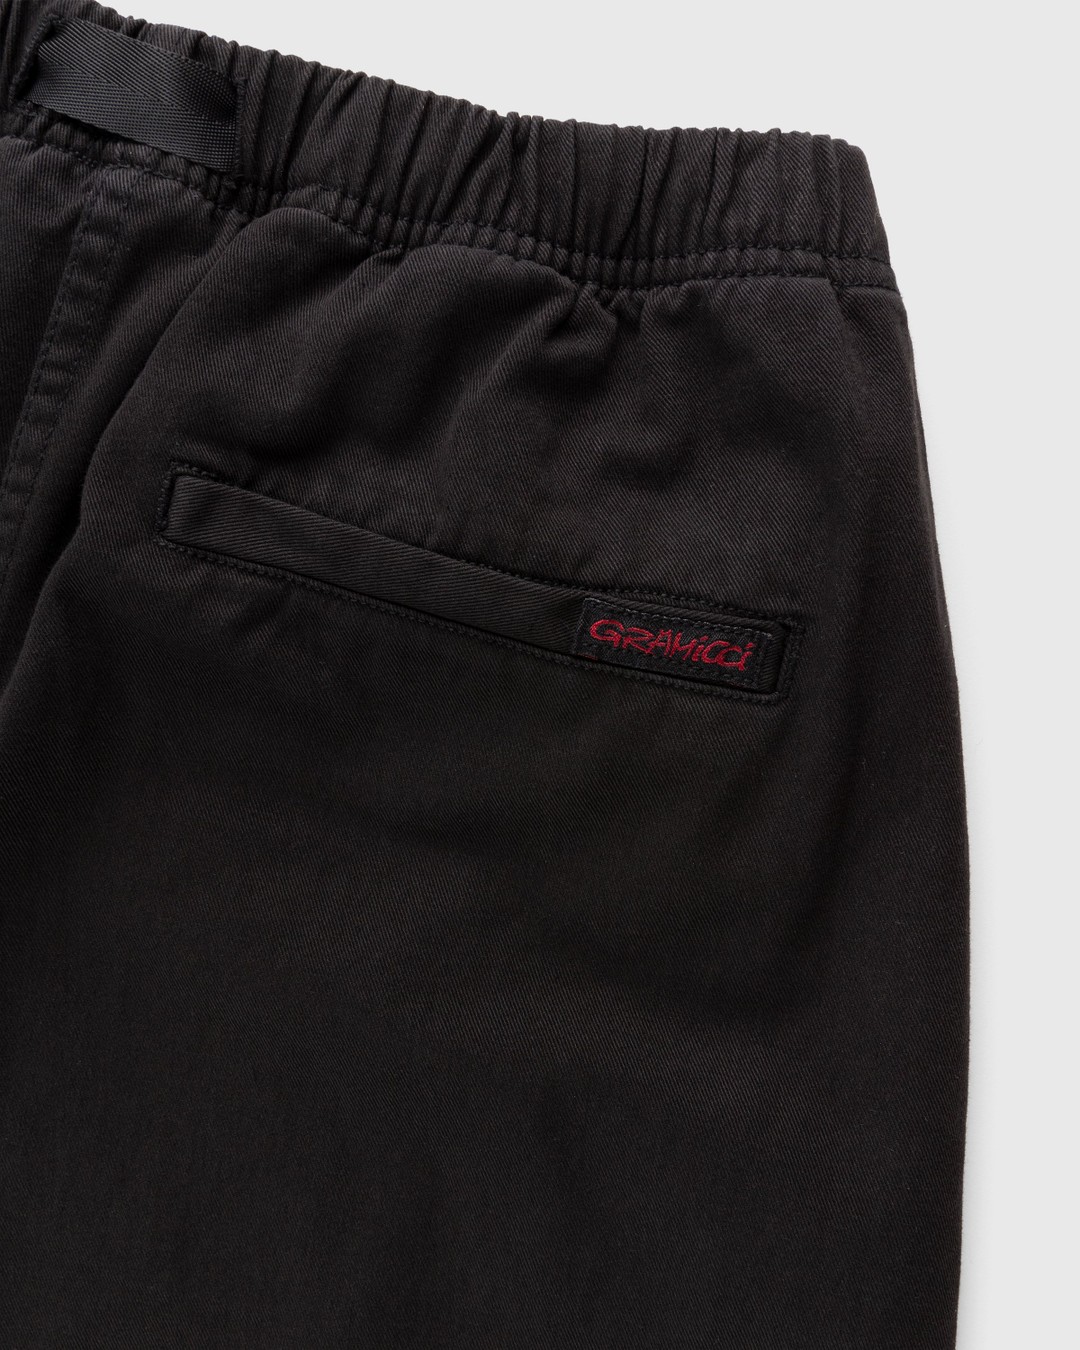 Gramicci – G-Shorts Black - Shorts - Black - Image 6